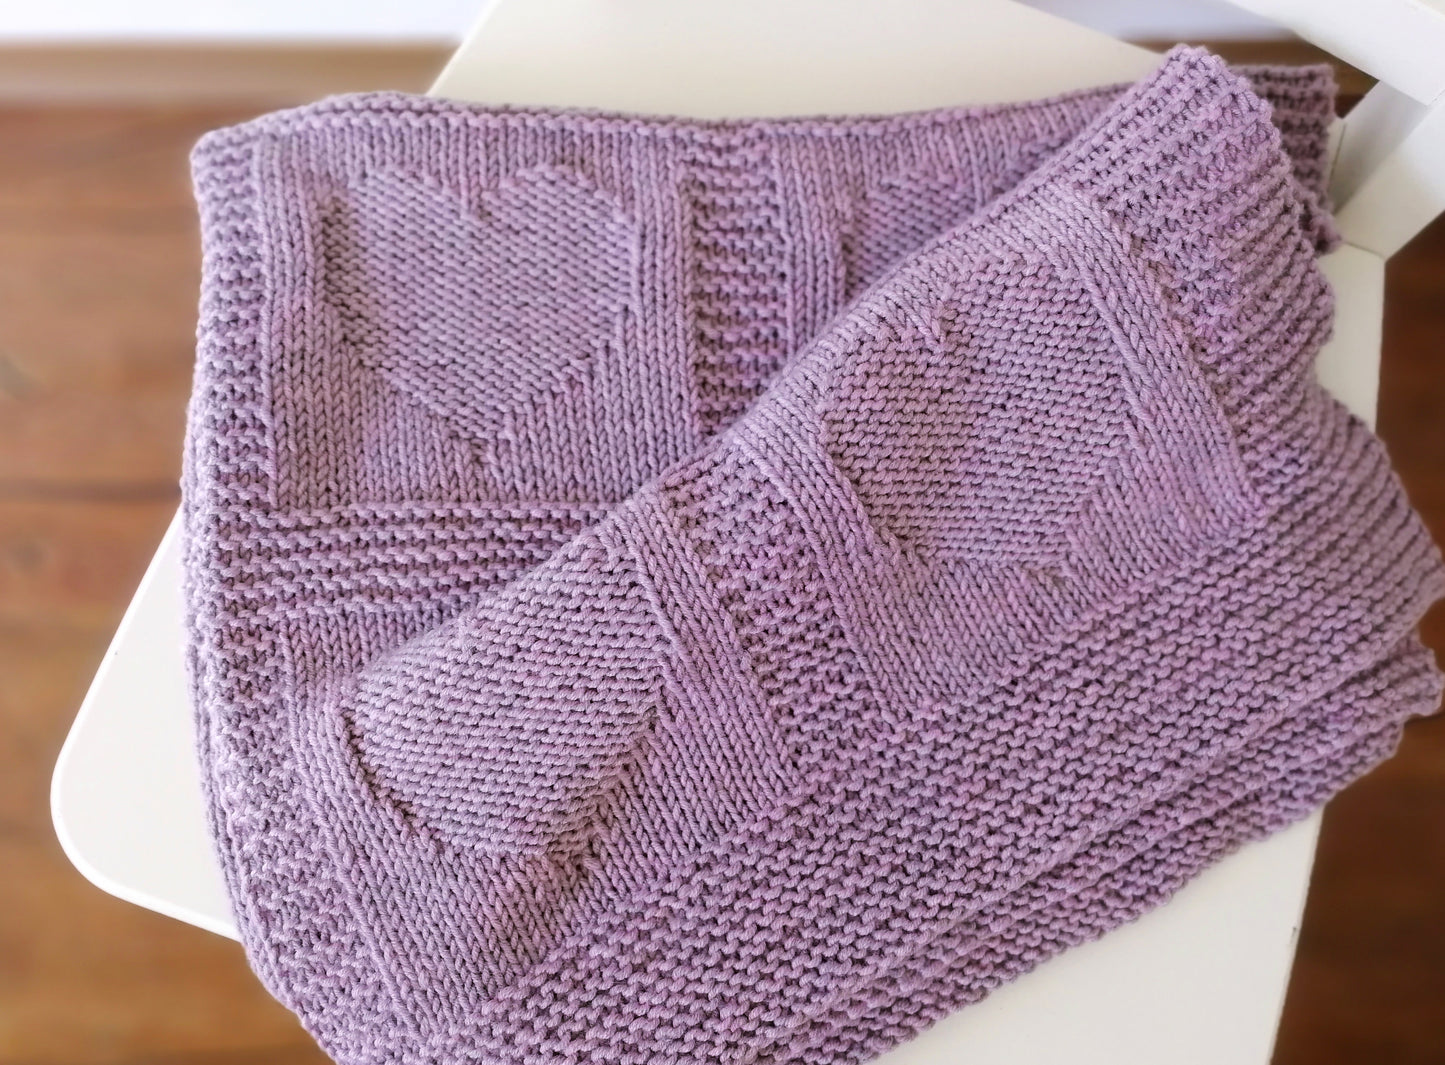 Close up for purple superwash merino wool yarn hand-knitted baby blanket in Hearts knitting pattern